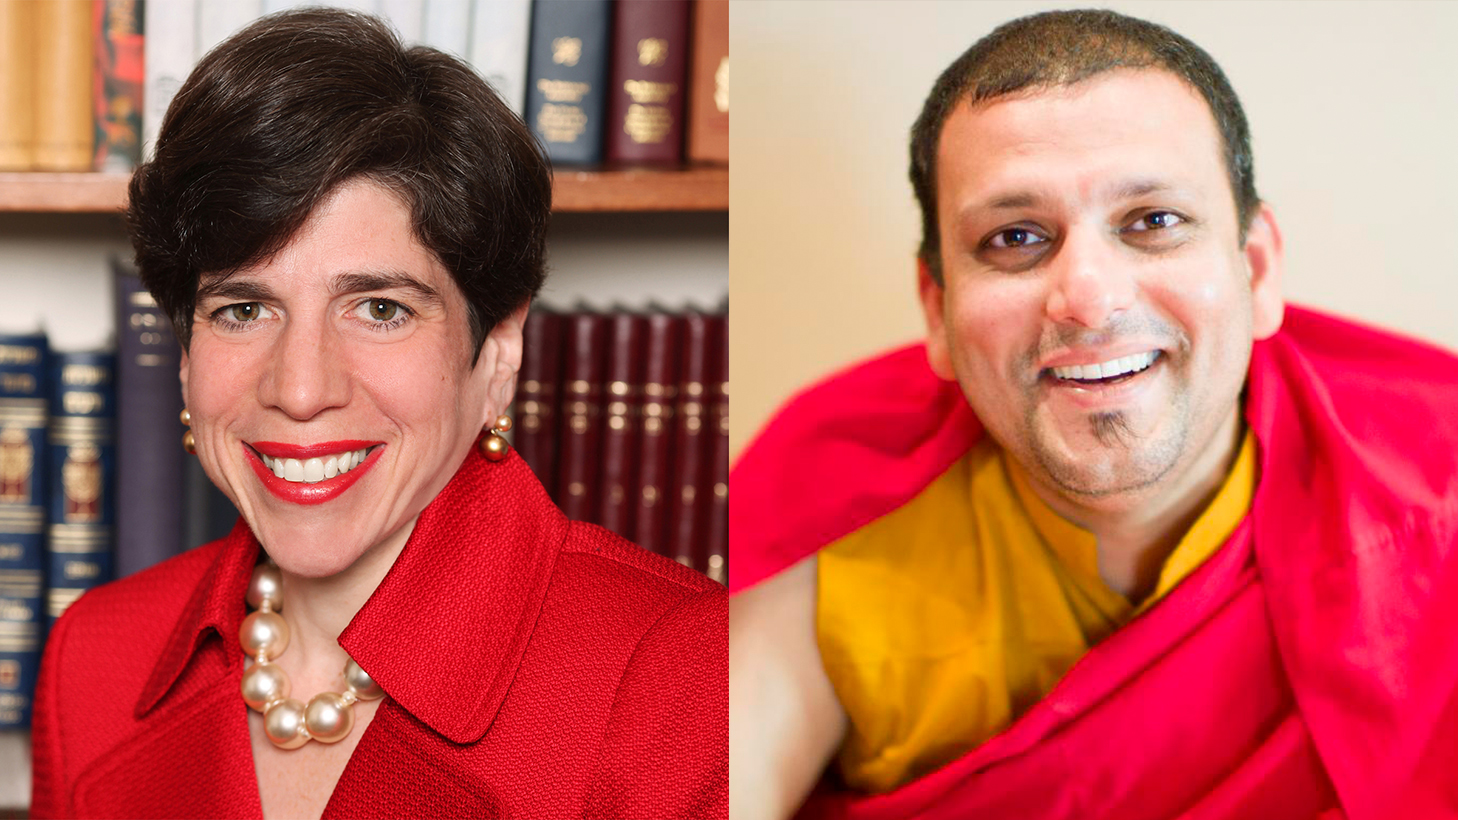 Rabbi Julie Schonfeld, left, and the Venerable Tenzin Priyadarshi. Courtesy photo, left. Photo by Christopher Michel, right.